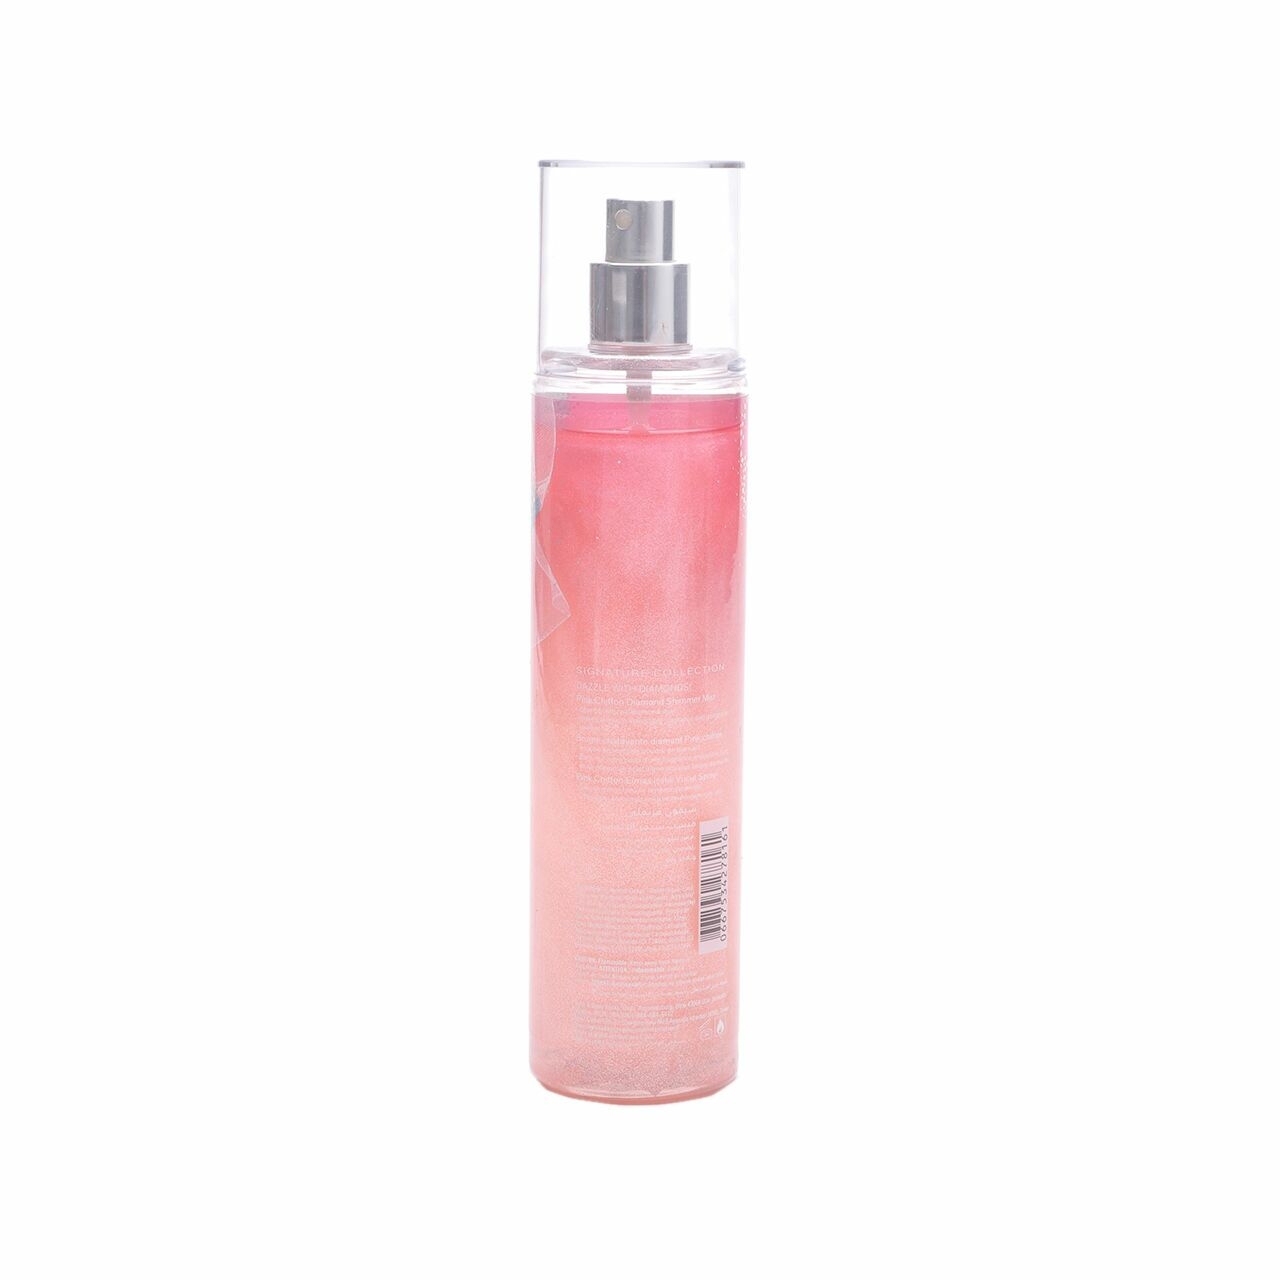 Bath & Body Works Pink Chiffon Diamond Shimmer Mist Fragrance